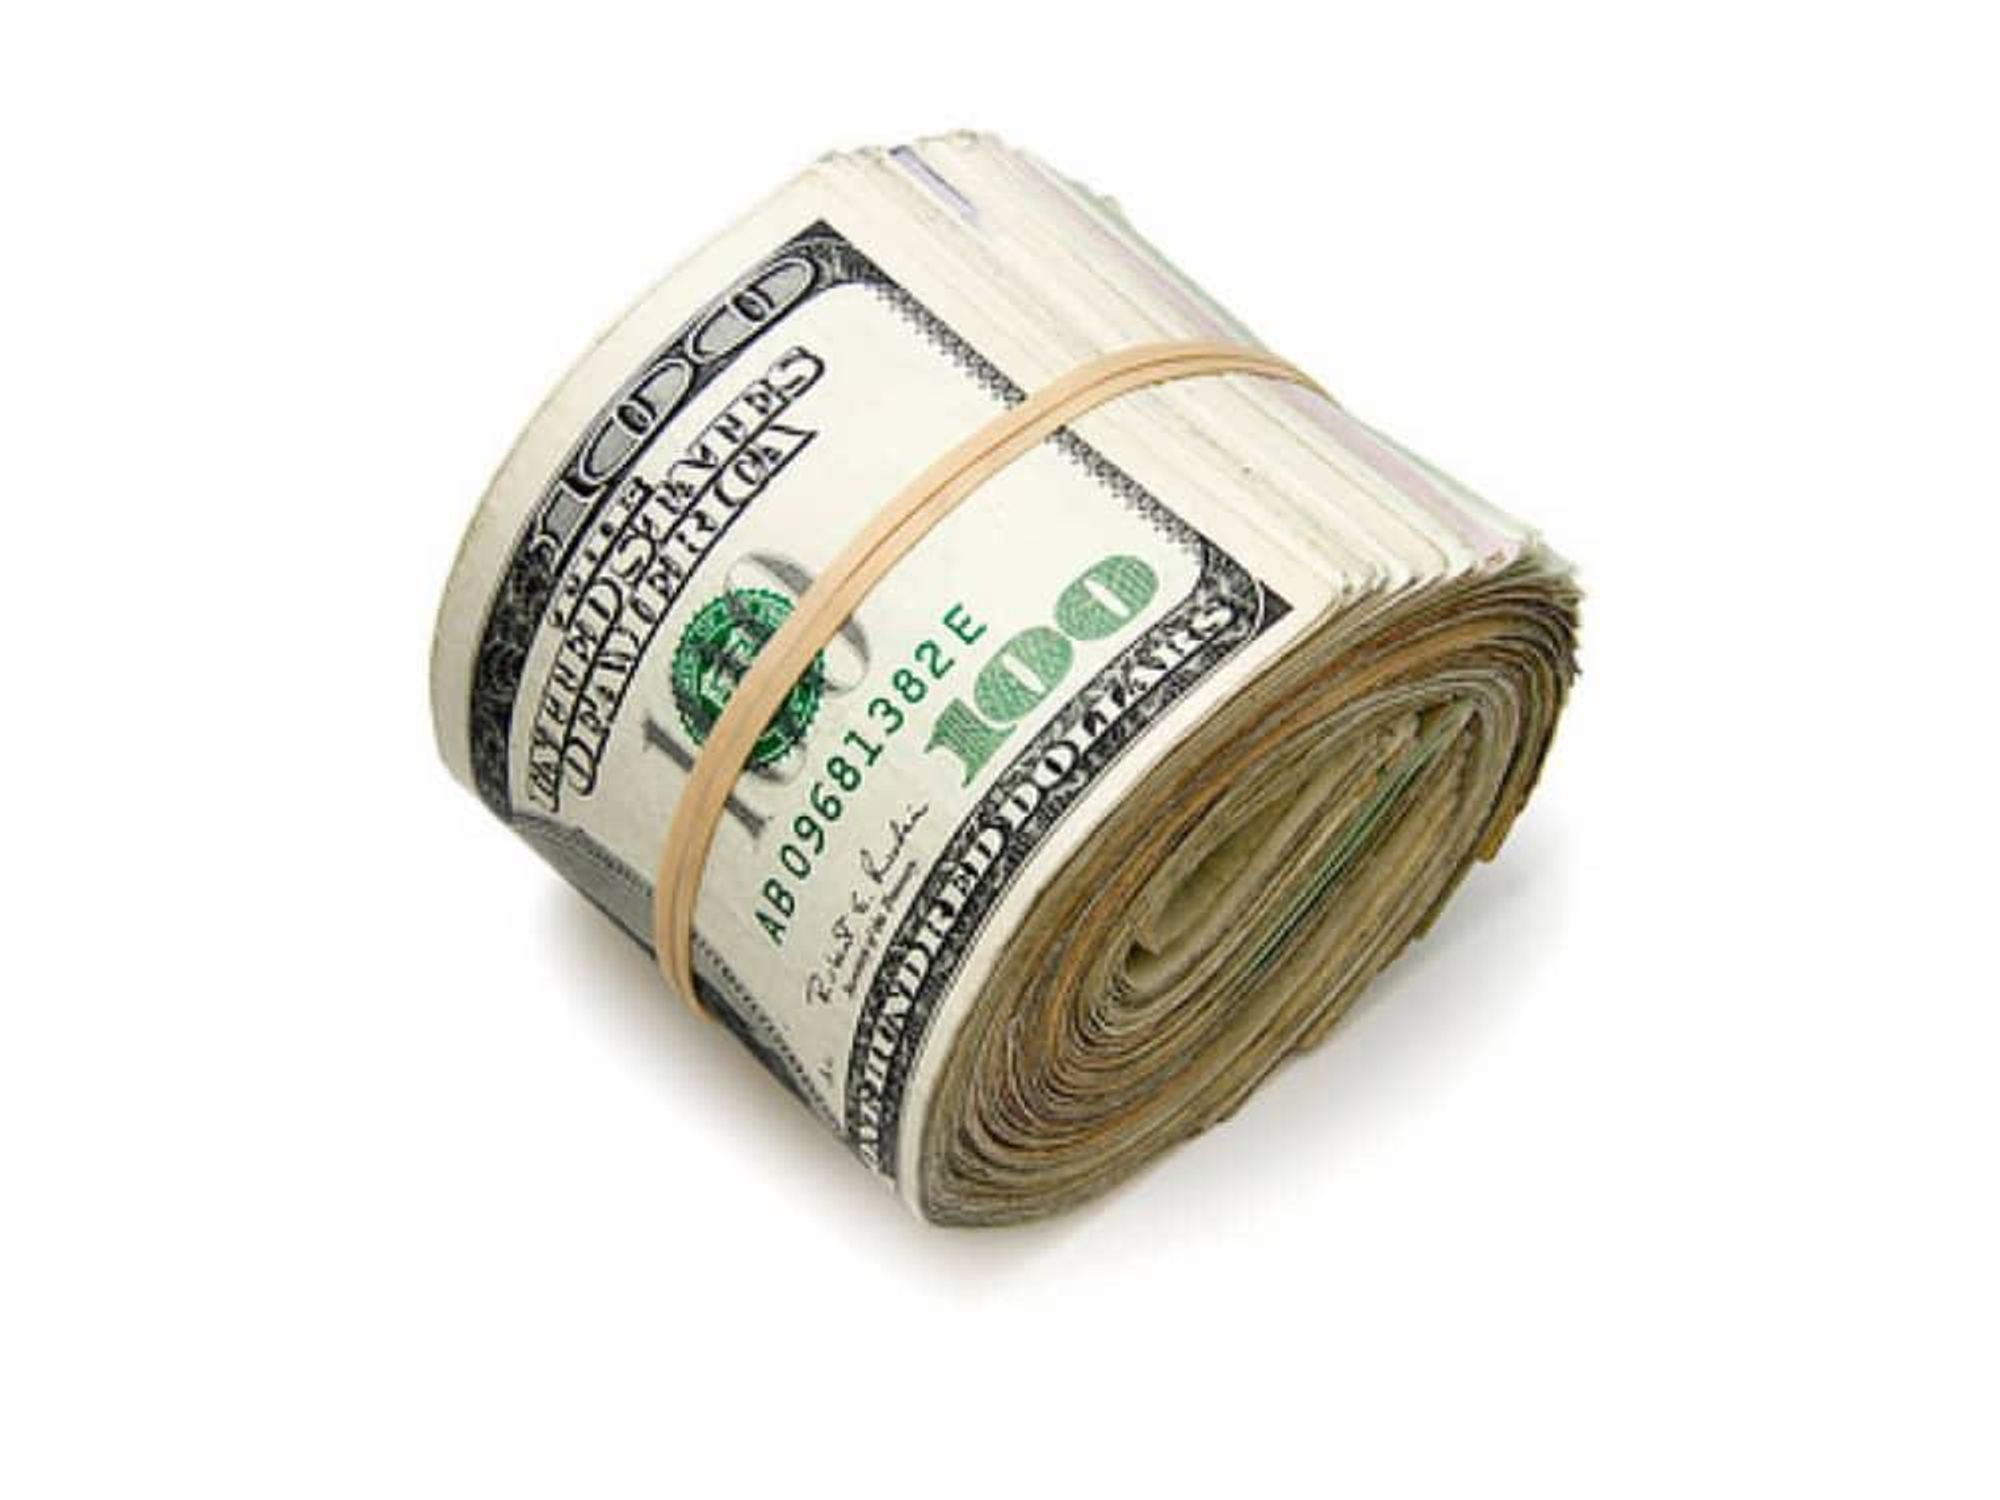 News_money_dollar bills